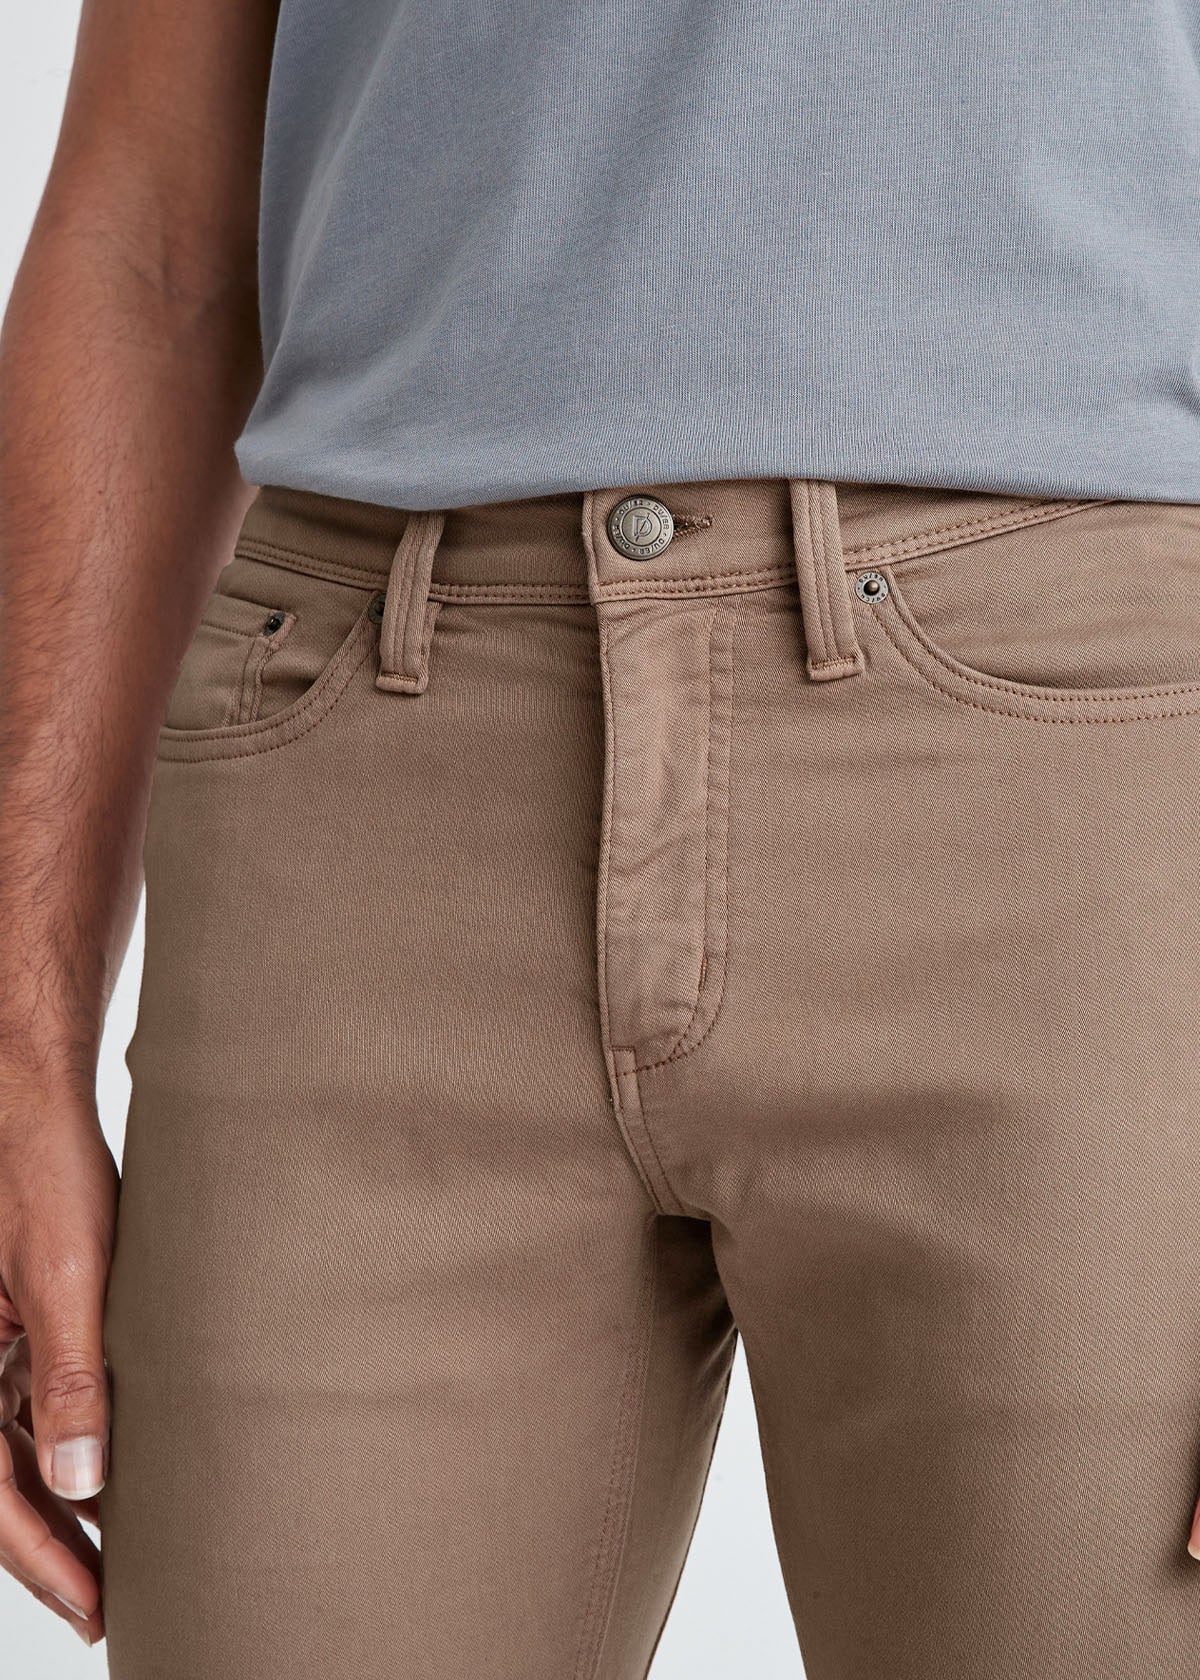 mens light brown slim fit dress sweatpant front waistband detail